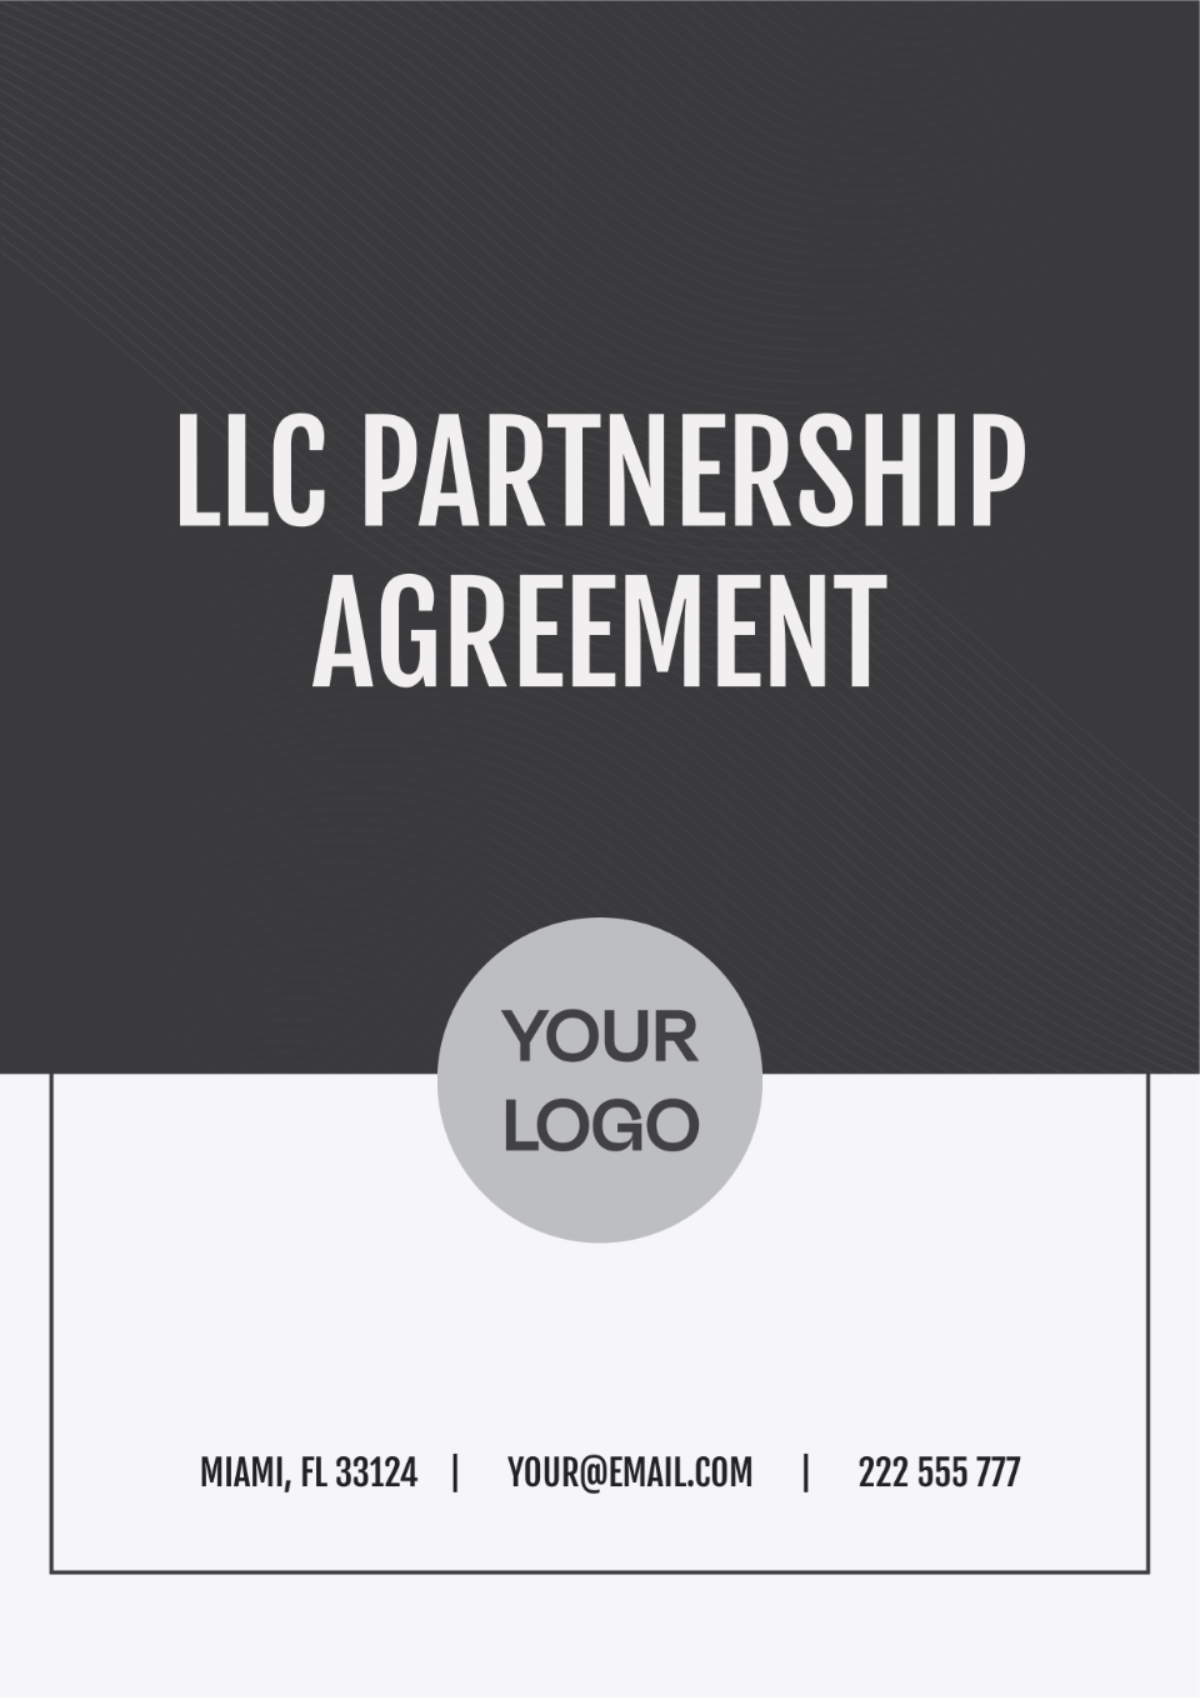 LLC Partnership Agreement Template